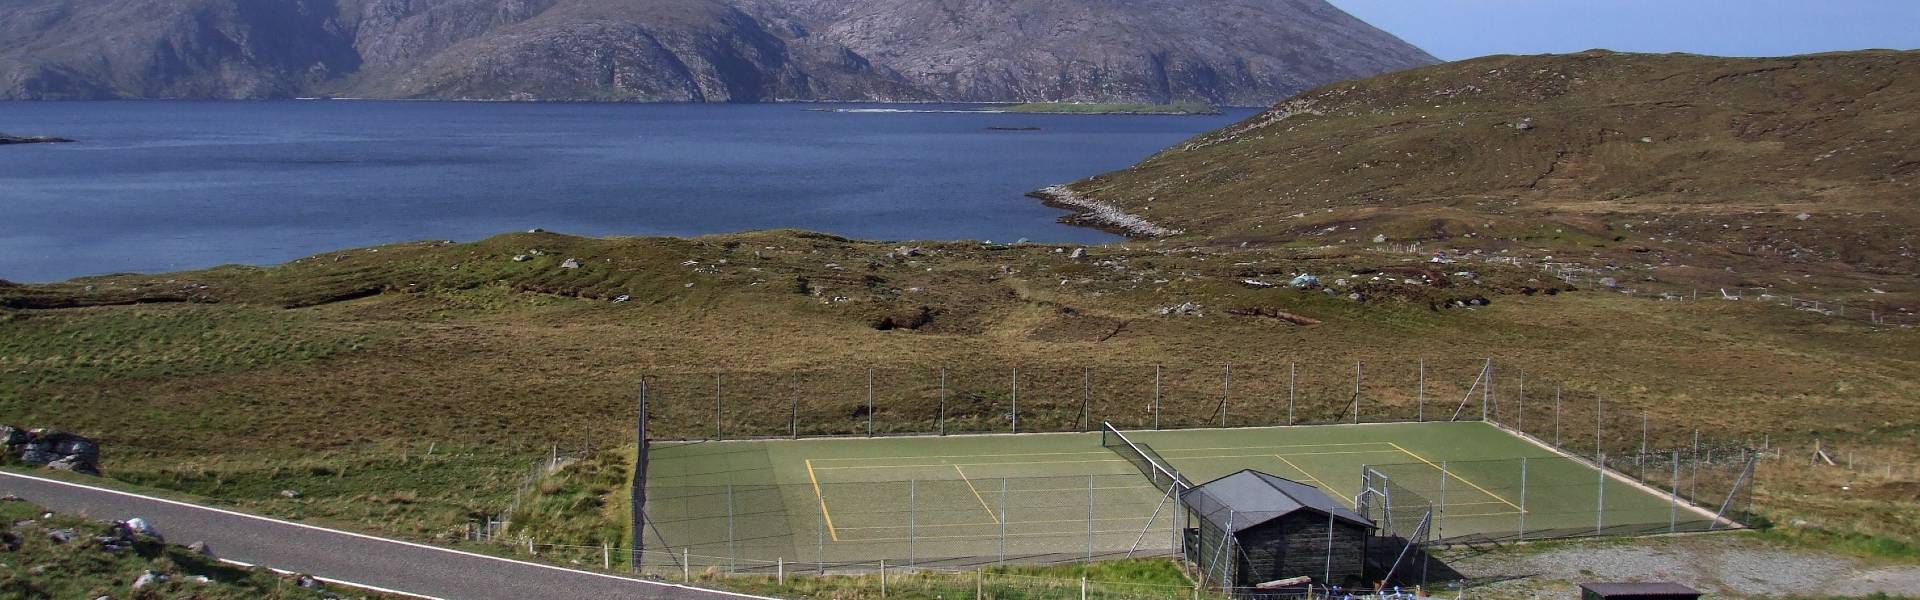 Tennis court on the Isle of Harris, Scotland